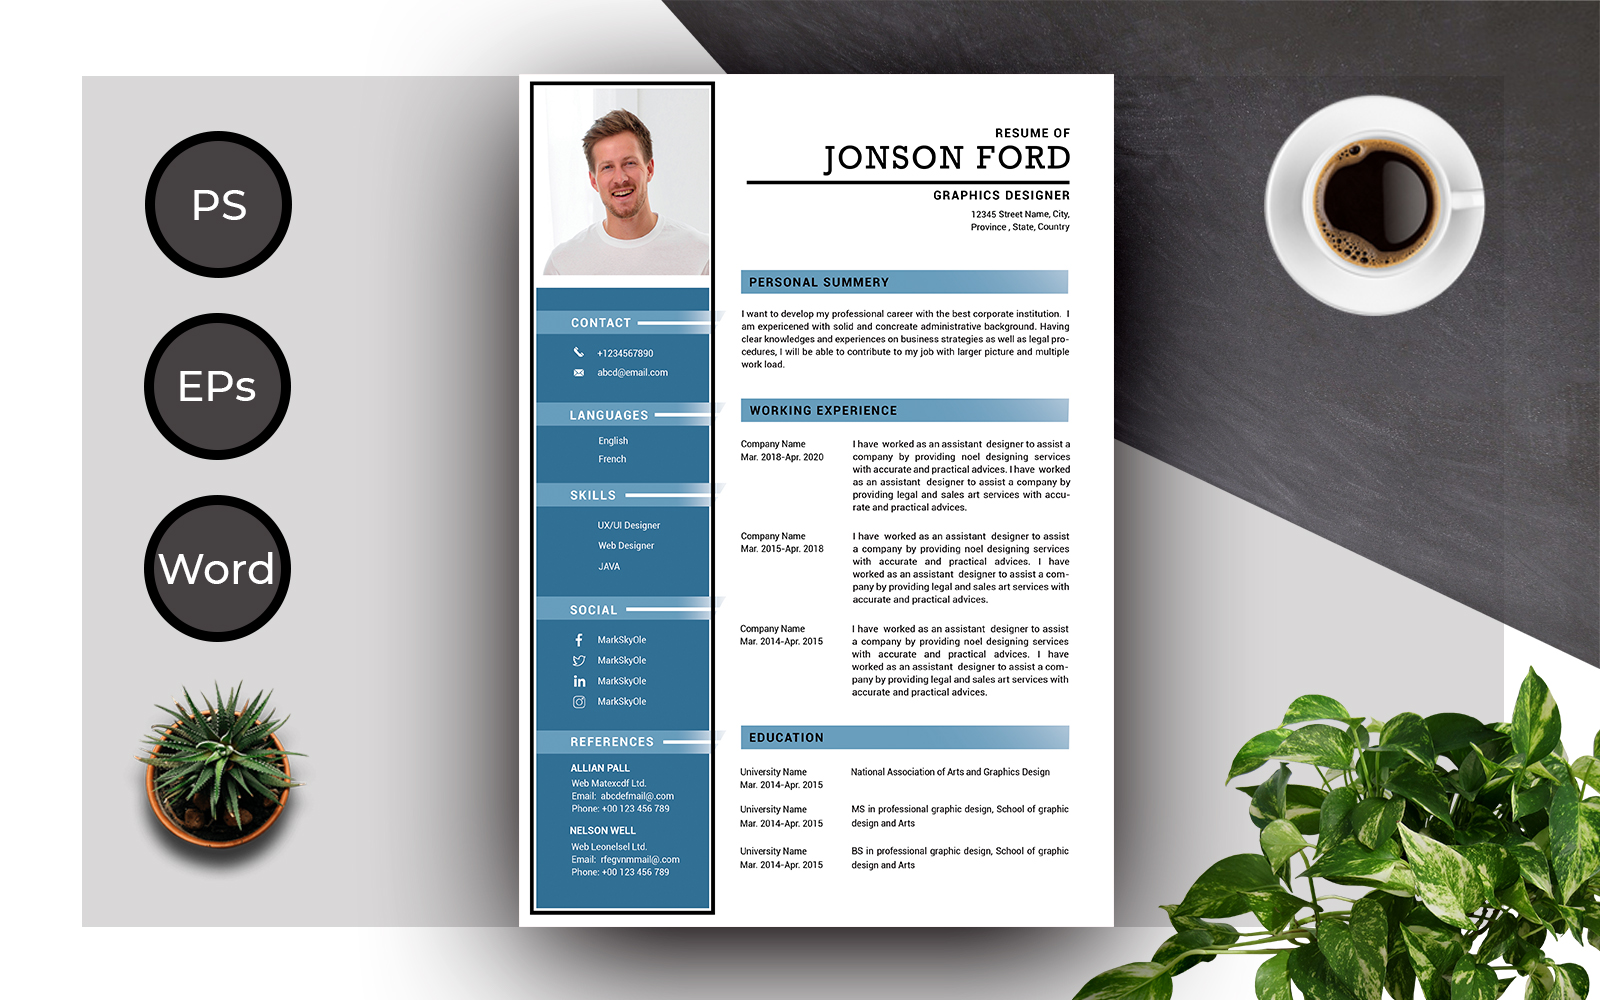 Resume Template of Jonson Ford - Best Creative CV Resume Template